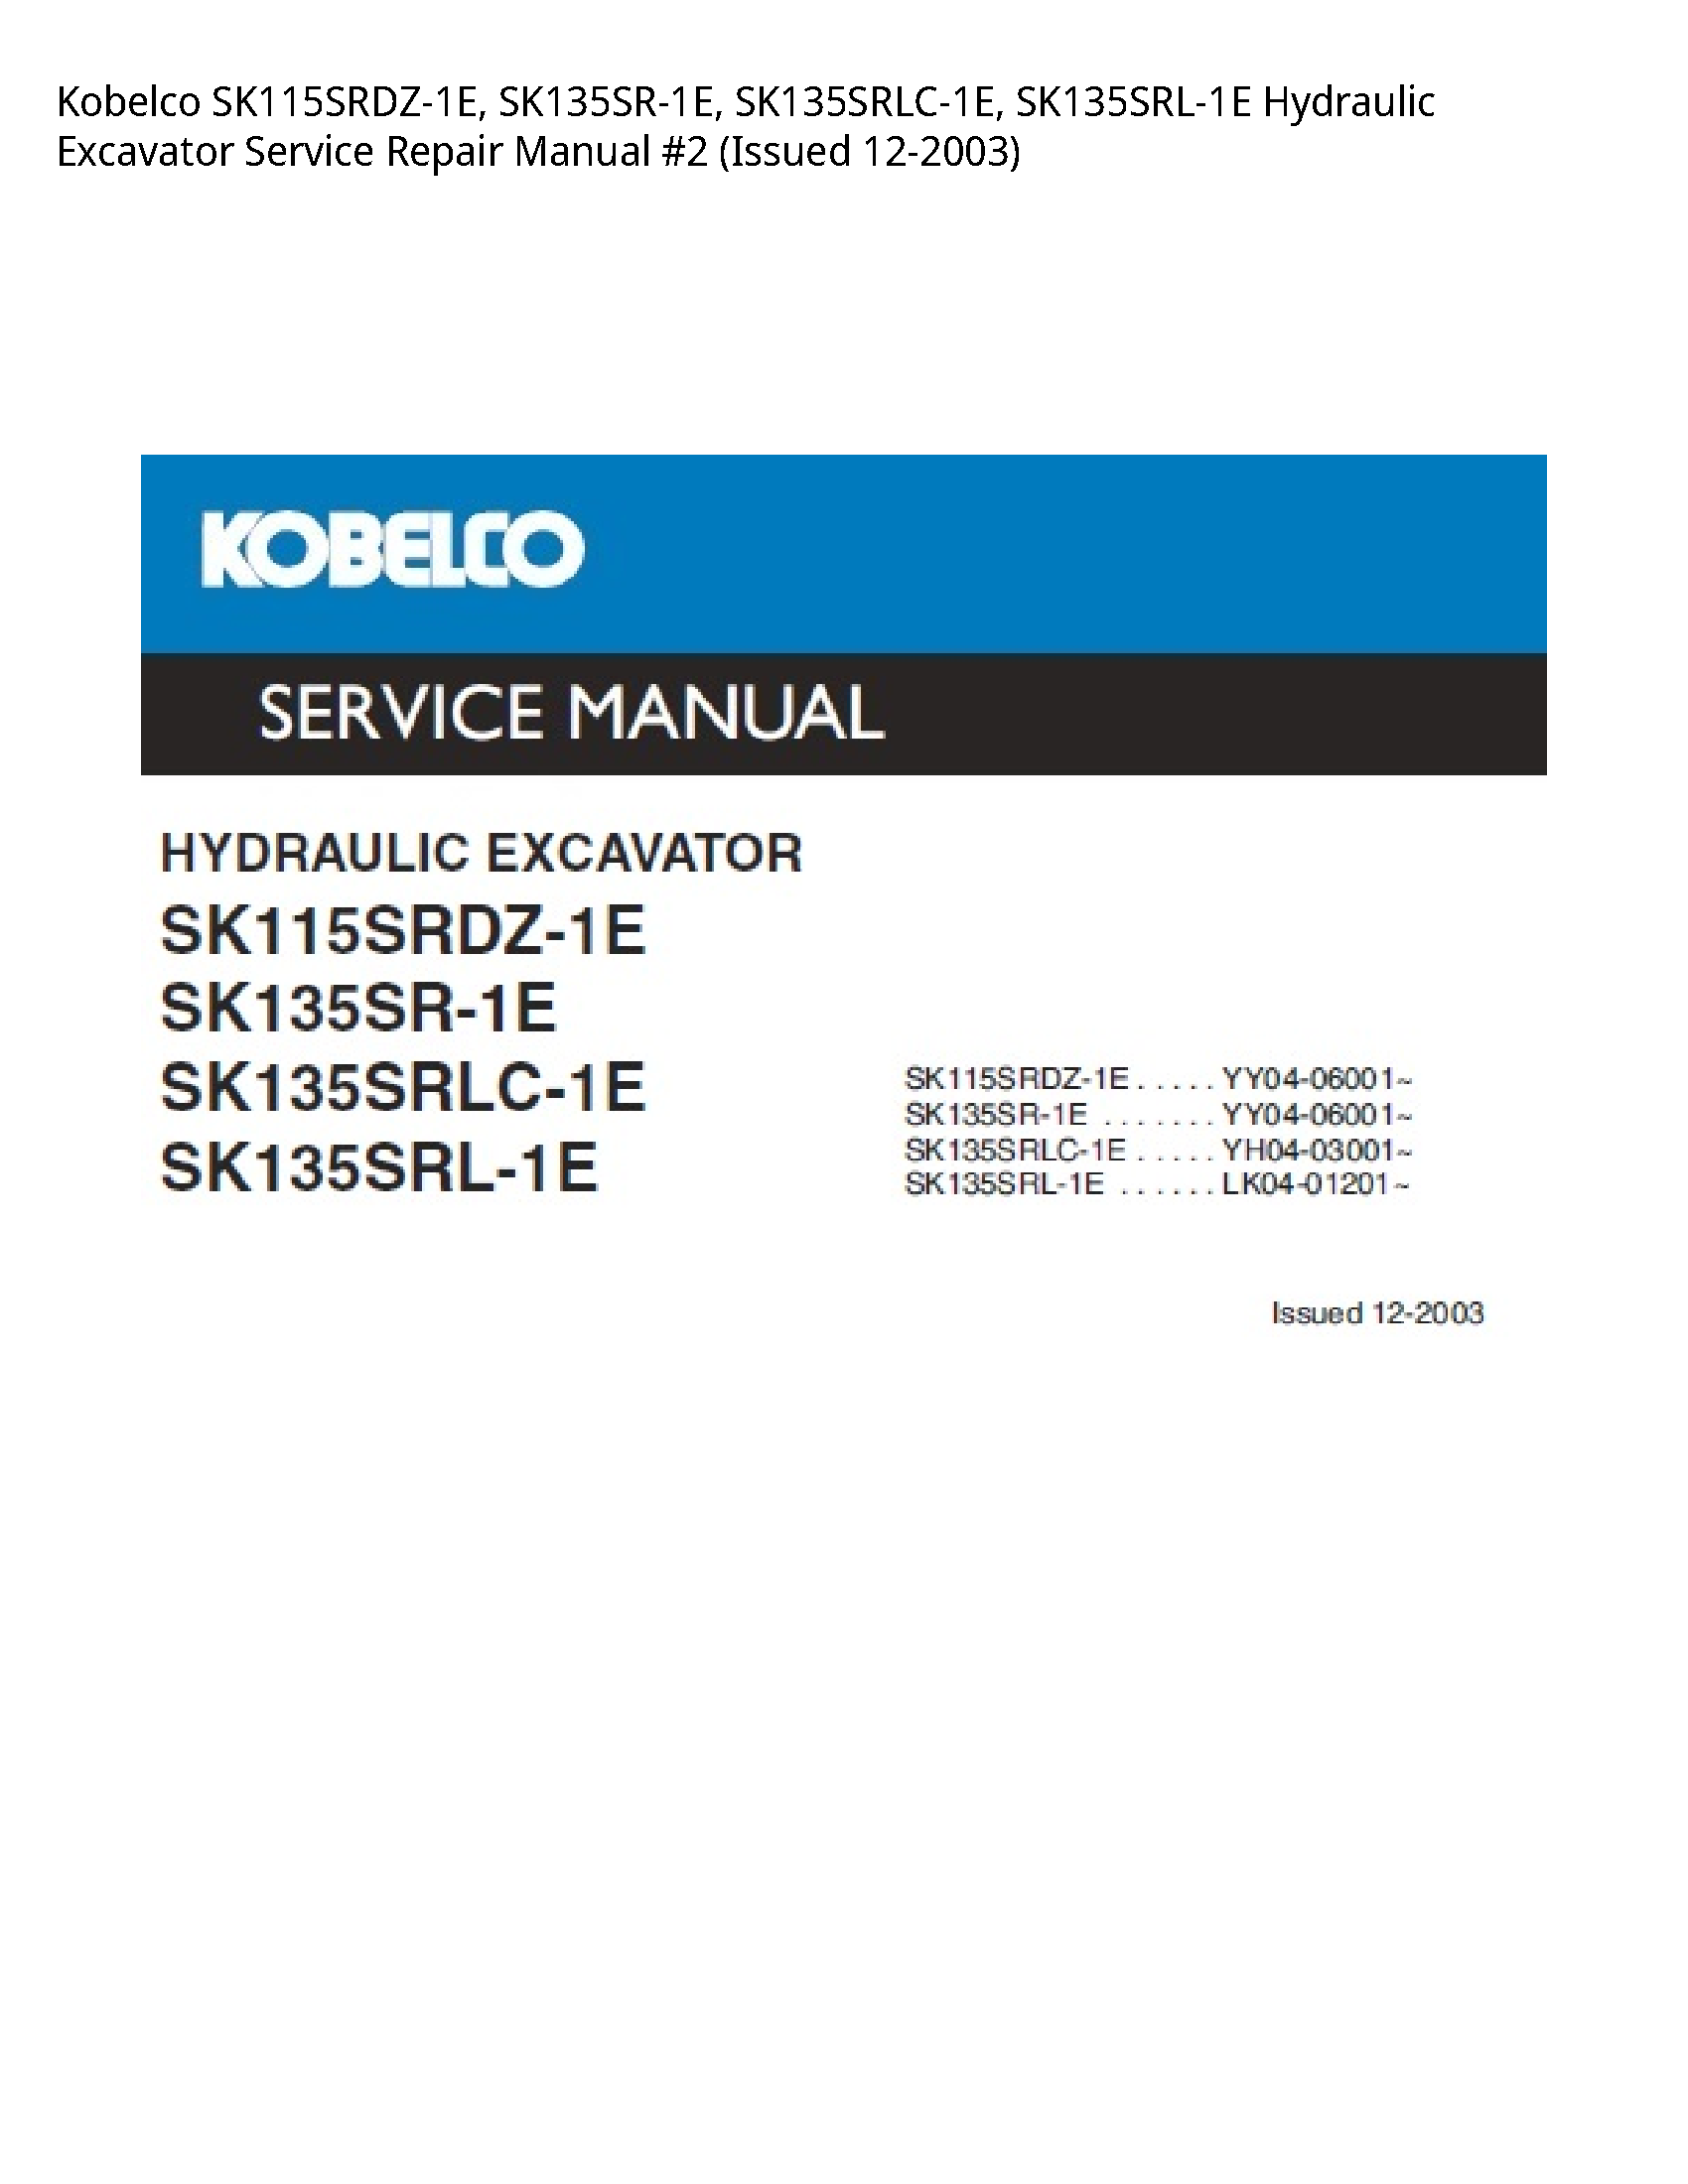 Kobelco SK115SRDZ-1E Hydraulic Excavator manual